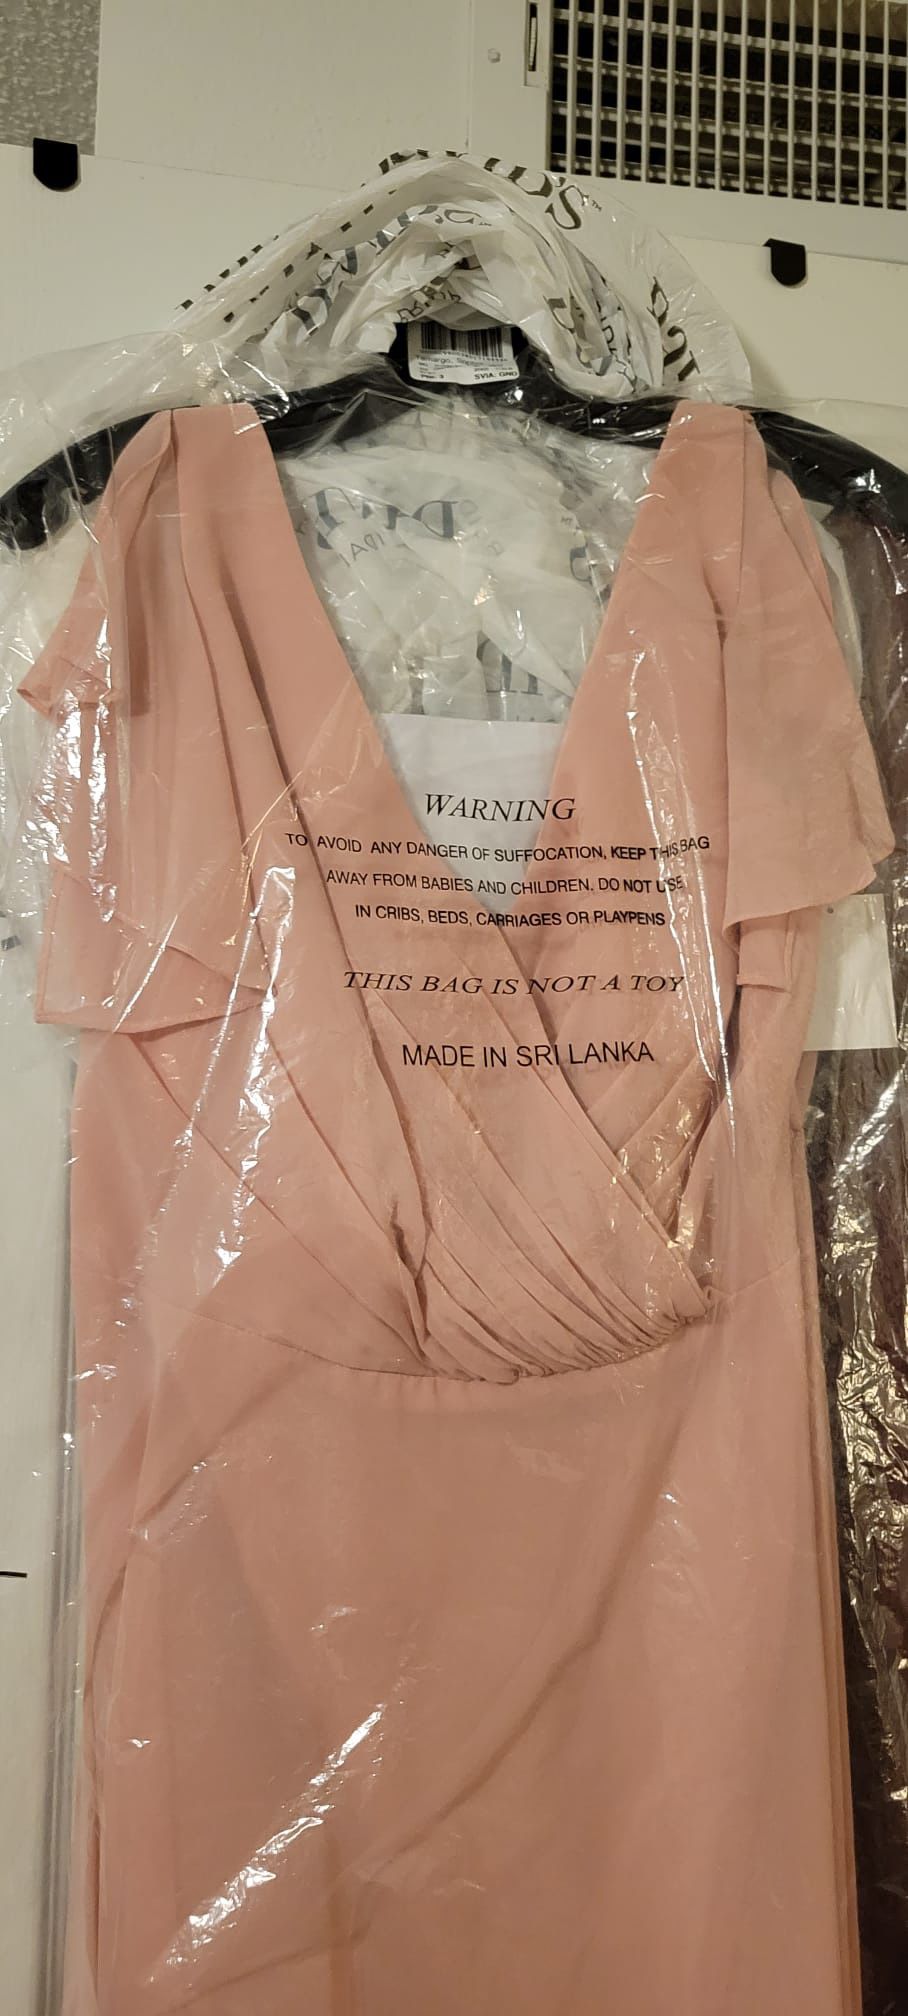 David’s Bridal Flutter-Sleeve Full Skirt Bridesmaid Dress Size 16 Ballet Pink NWT